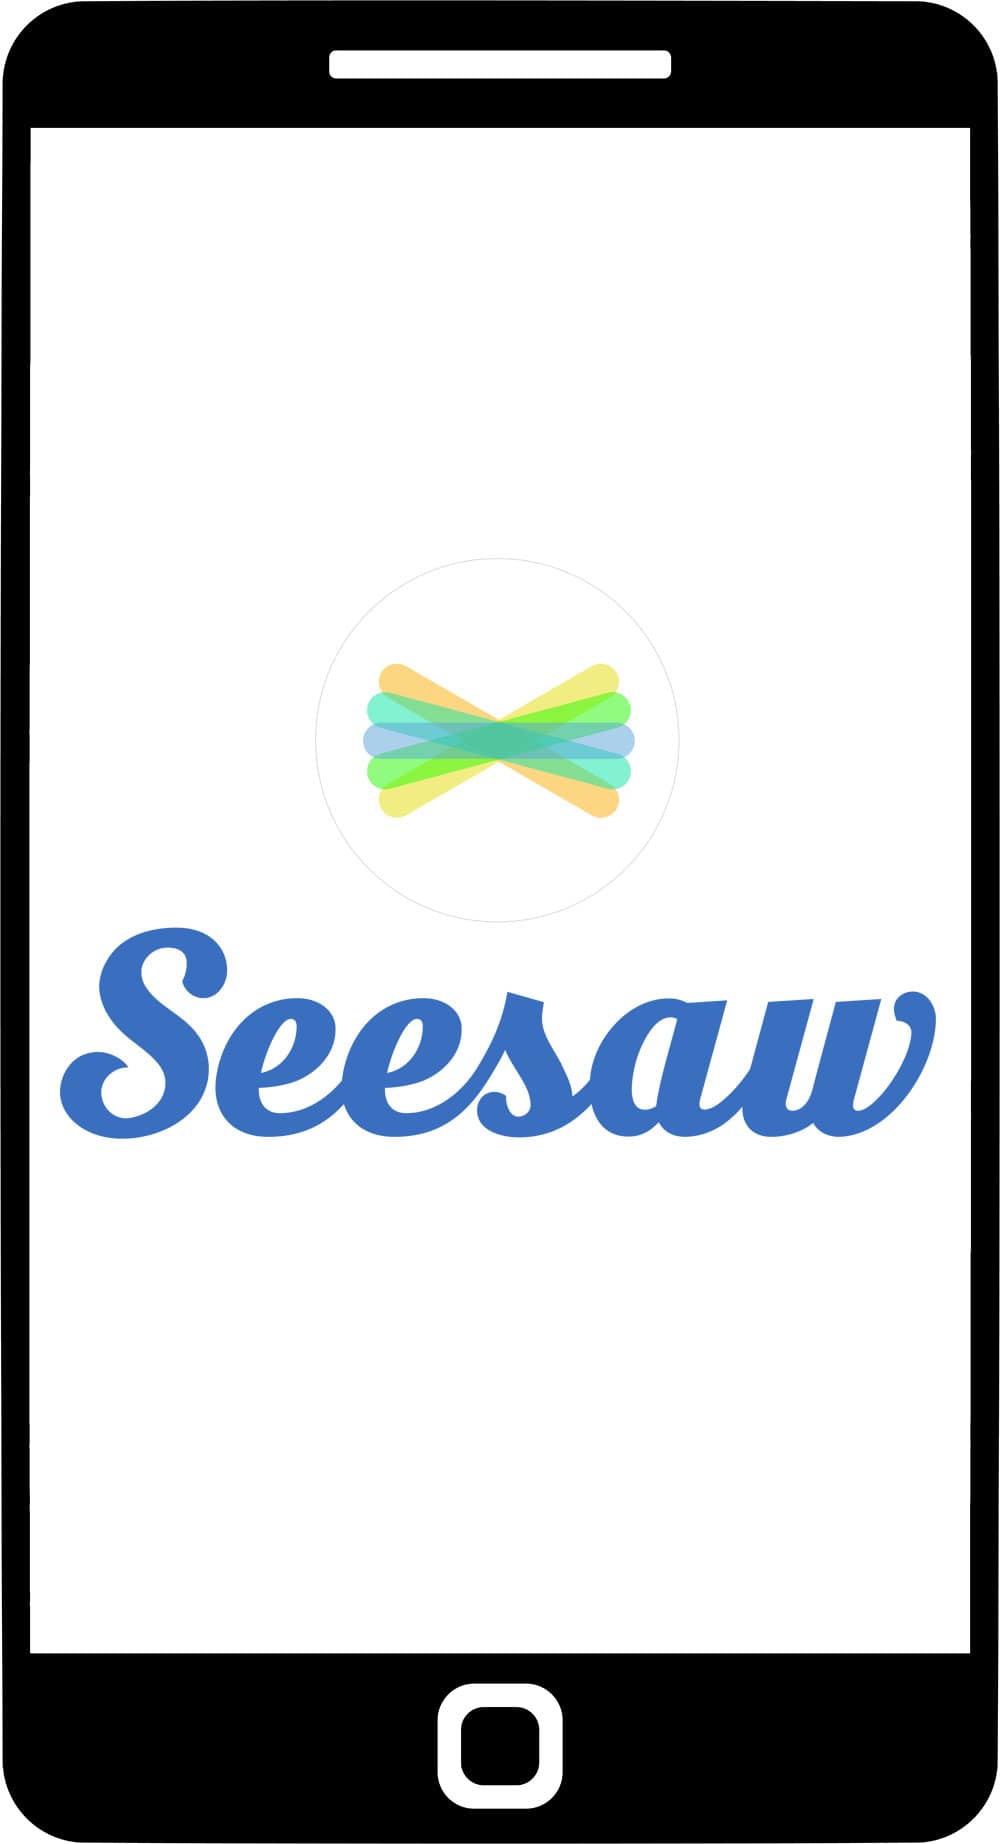 Seesaw mobile app screen